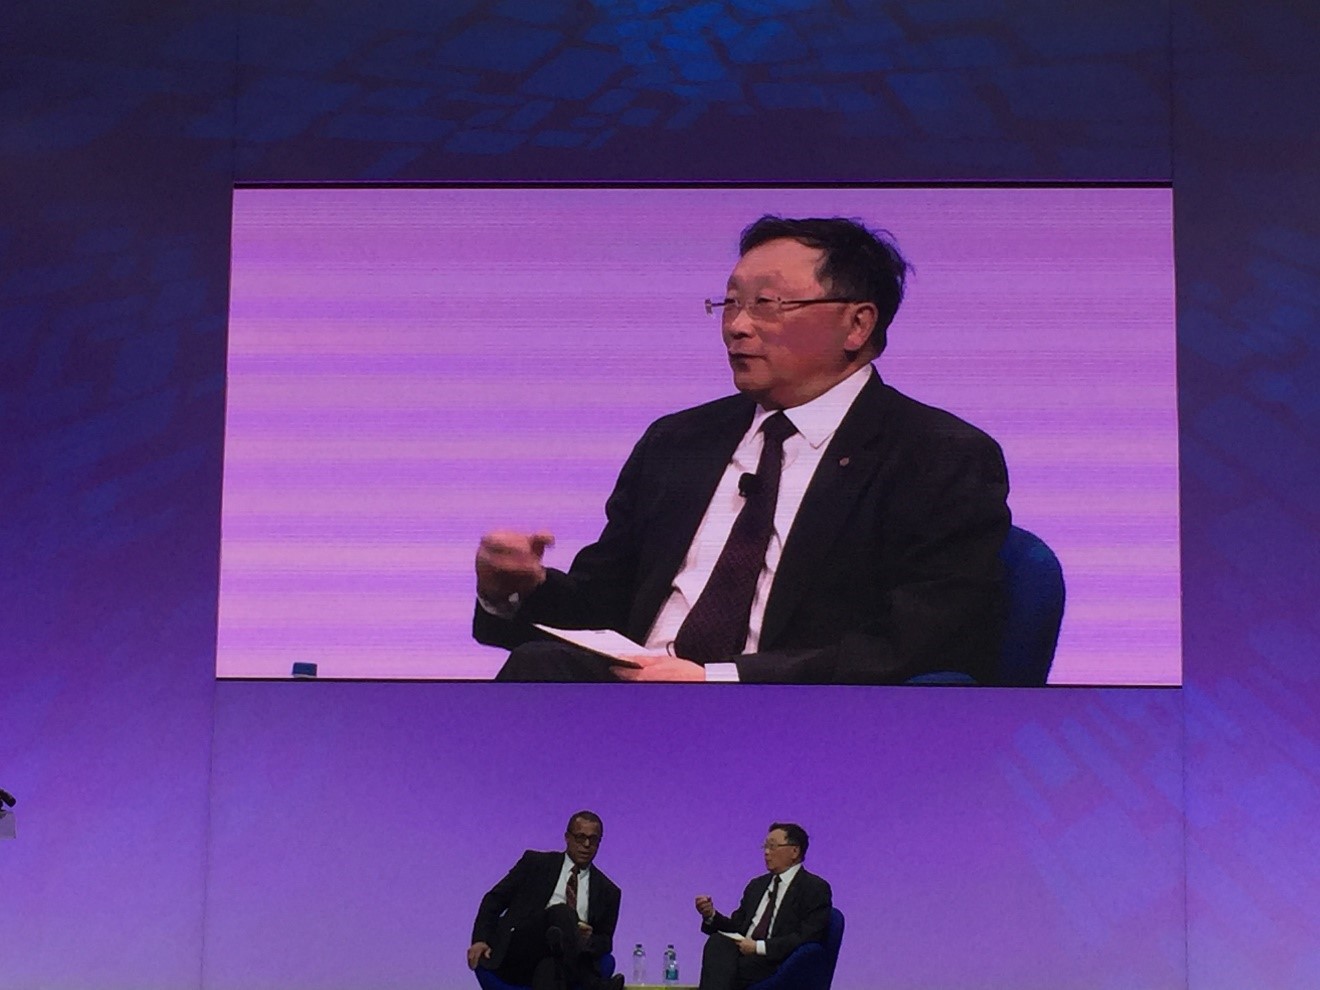 Mr. John S. Chen, CEO of Blackberry.